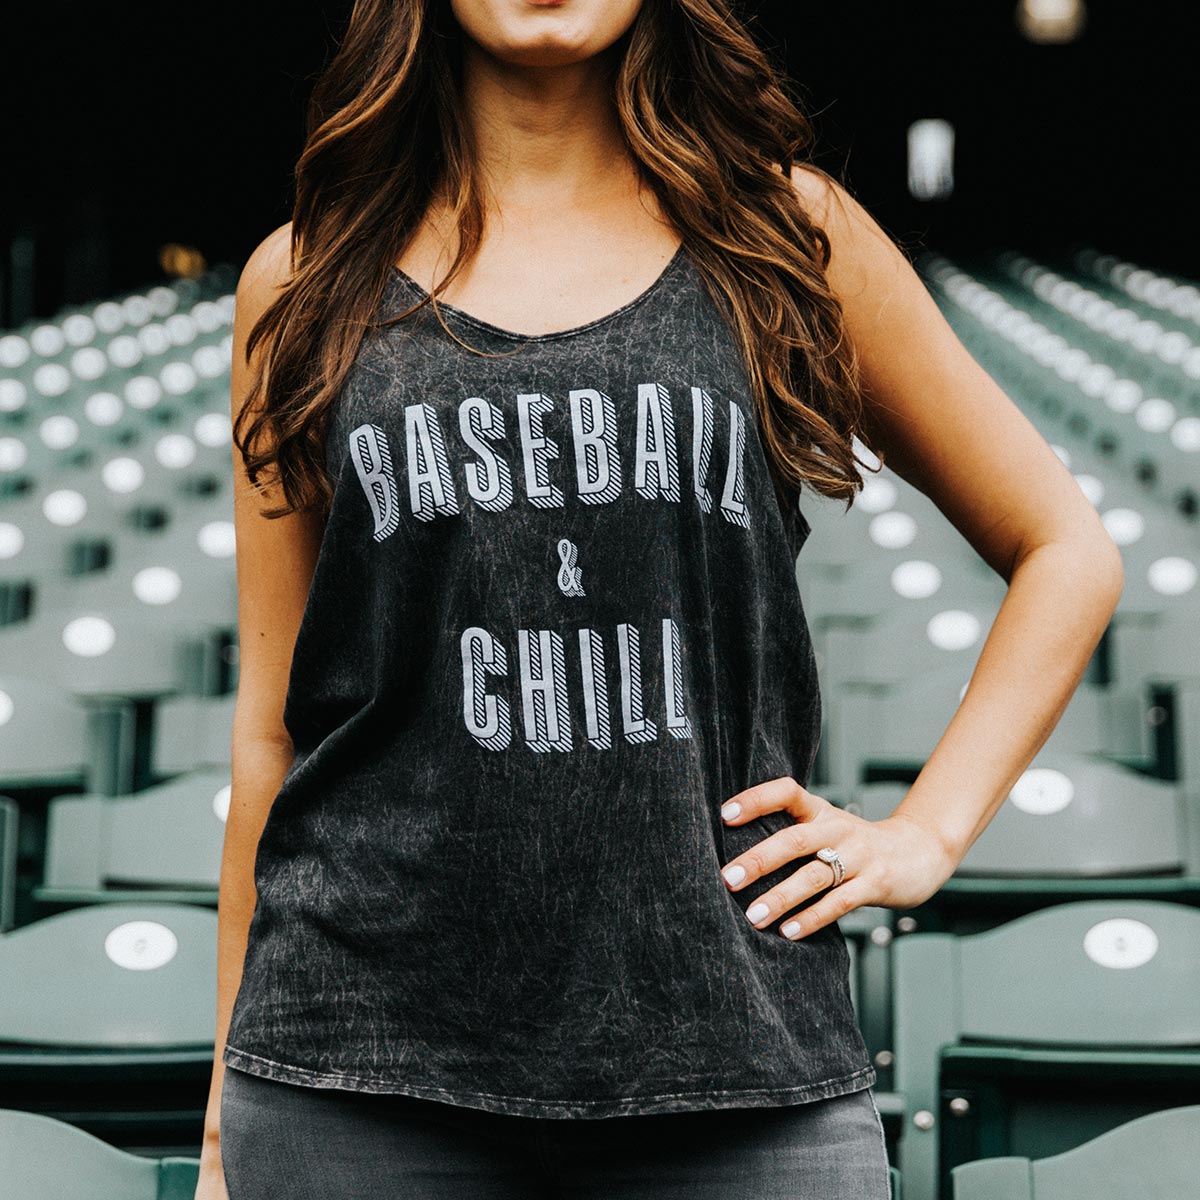 chill baseball shirt